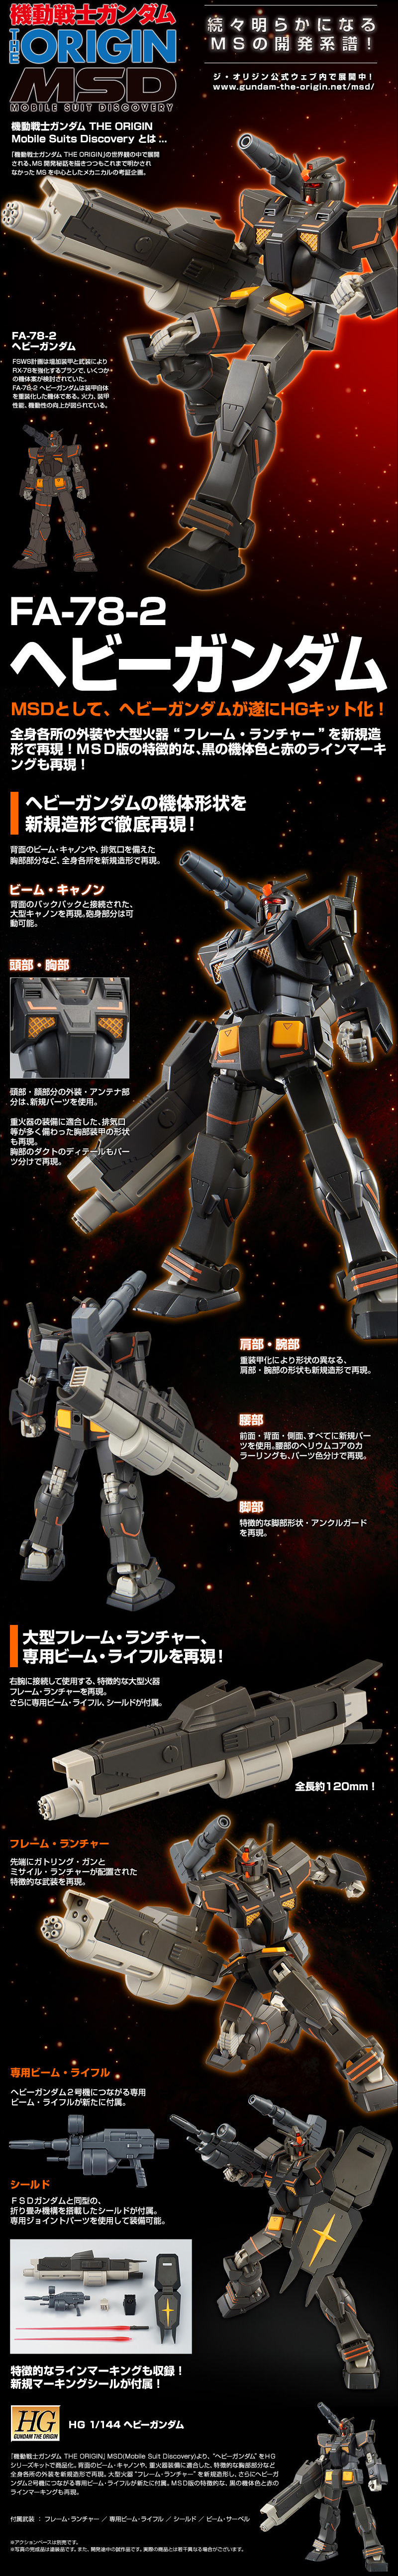 HG Heavy Gundam The Origin Details